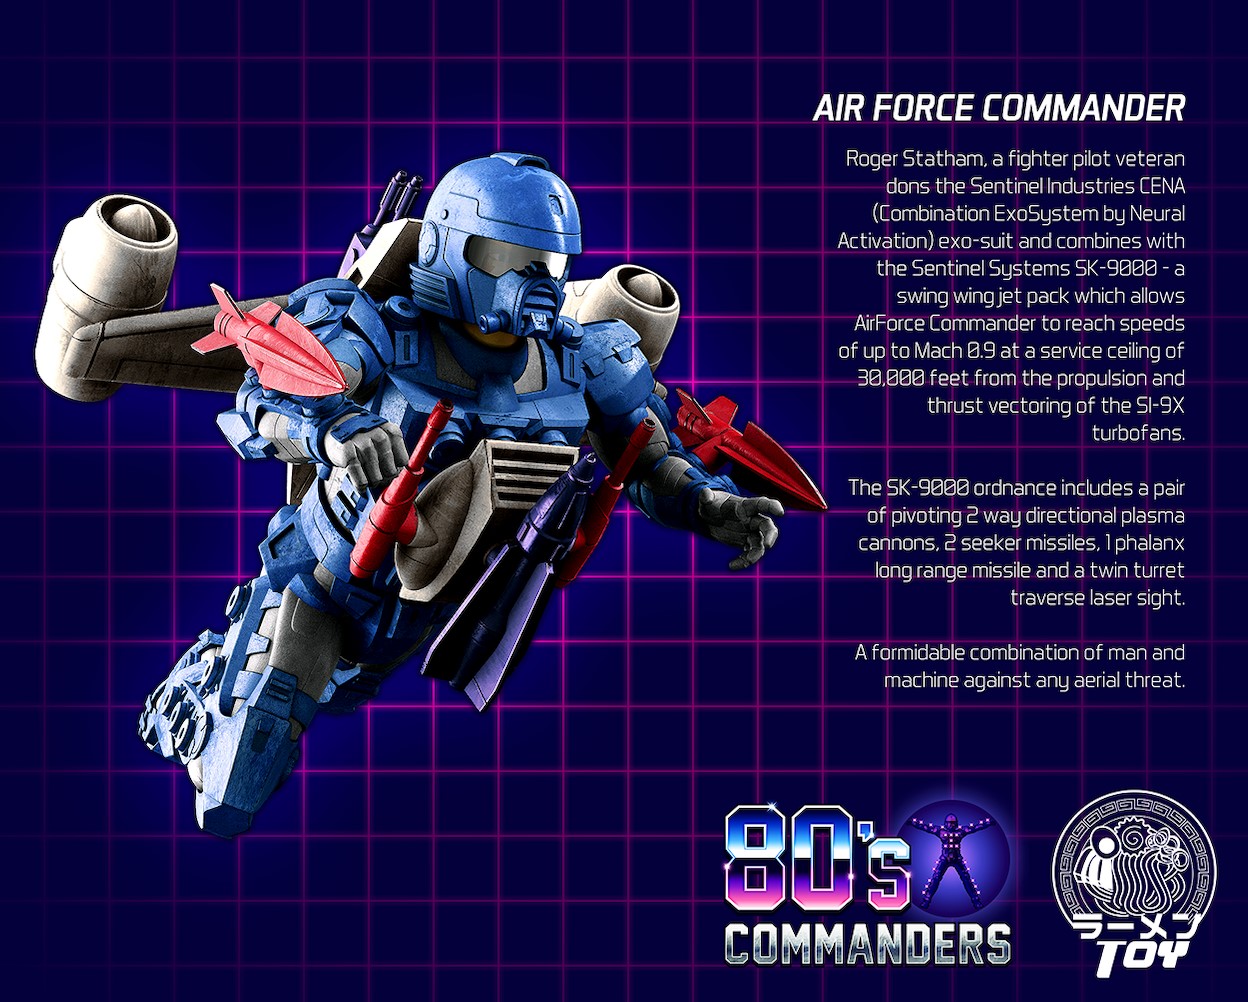 80s Commander - Air Force Commander